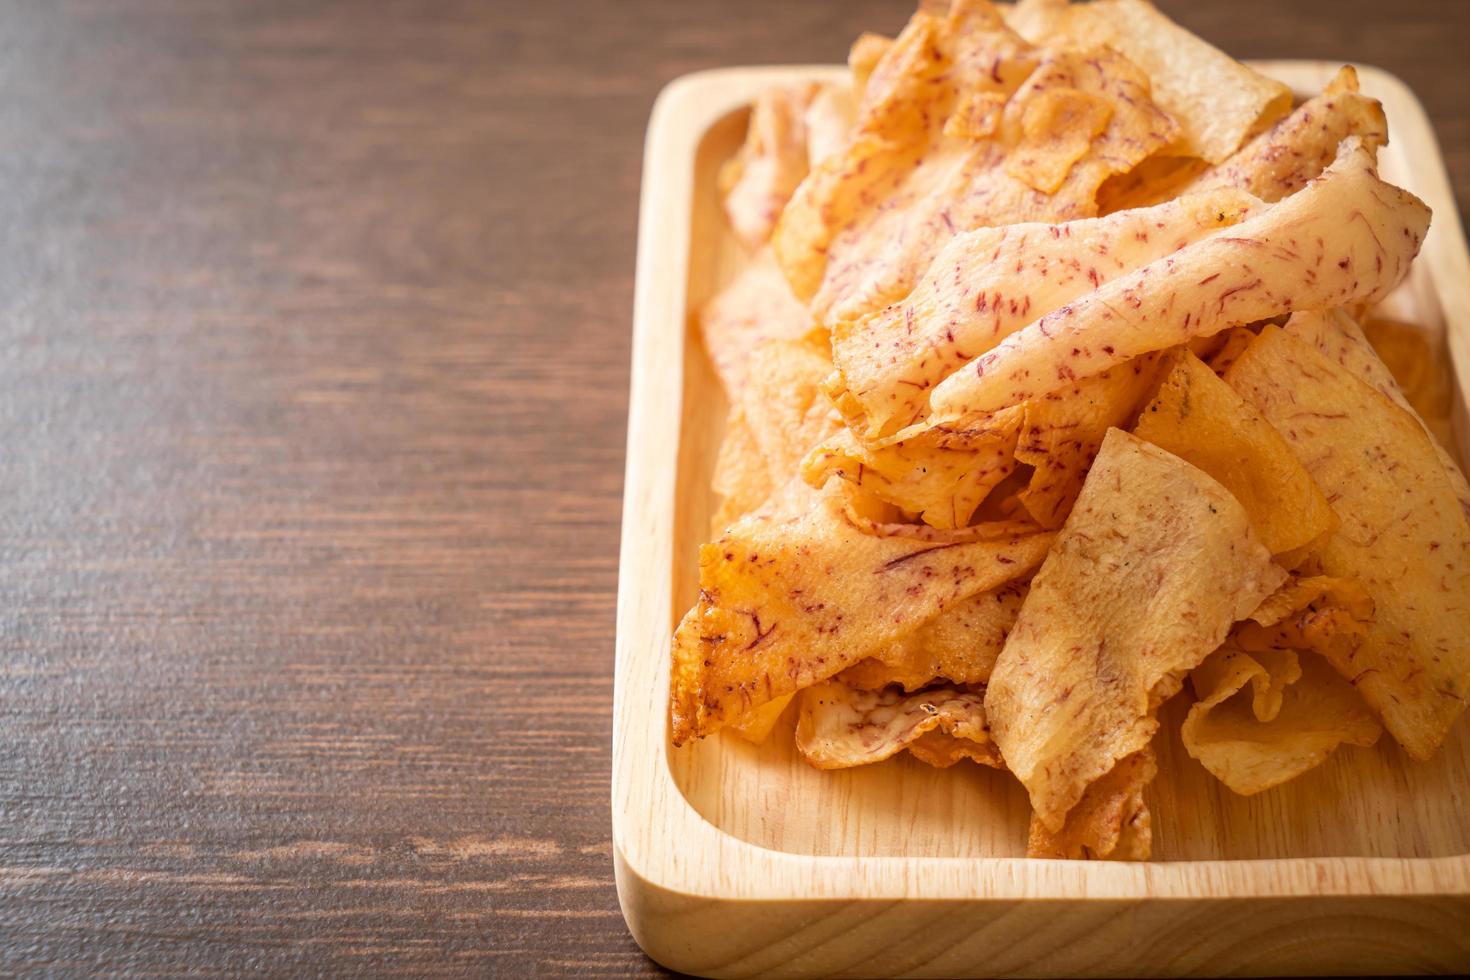 Taro Chips - fried or baked sliced taro photo